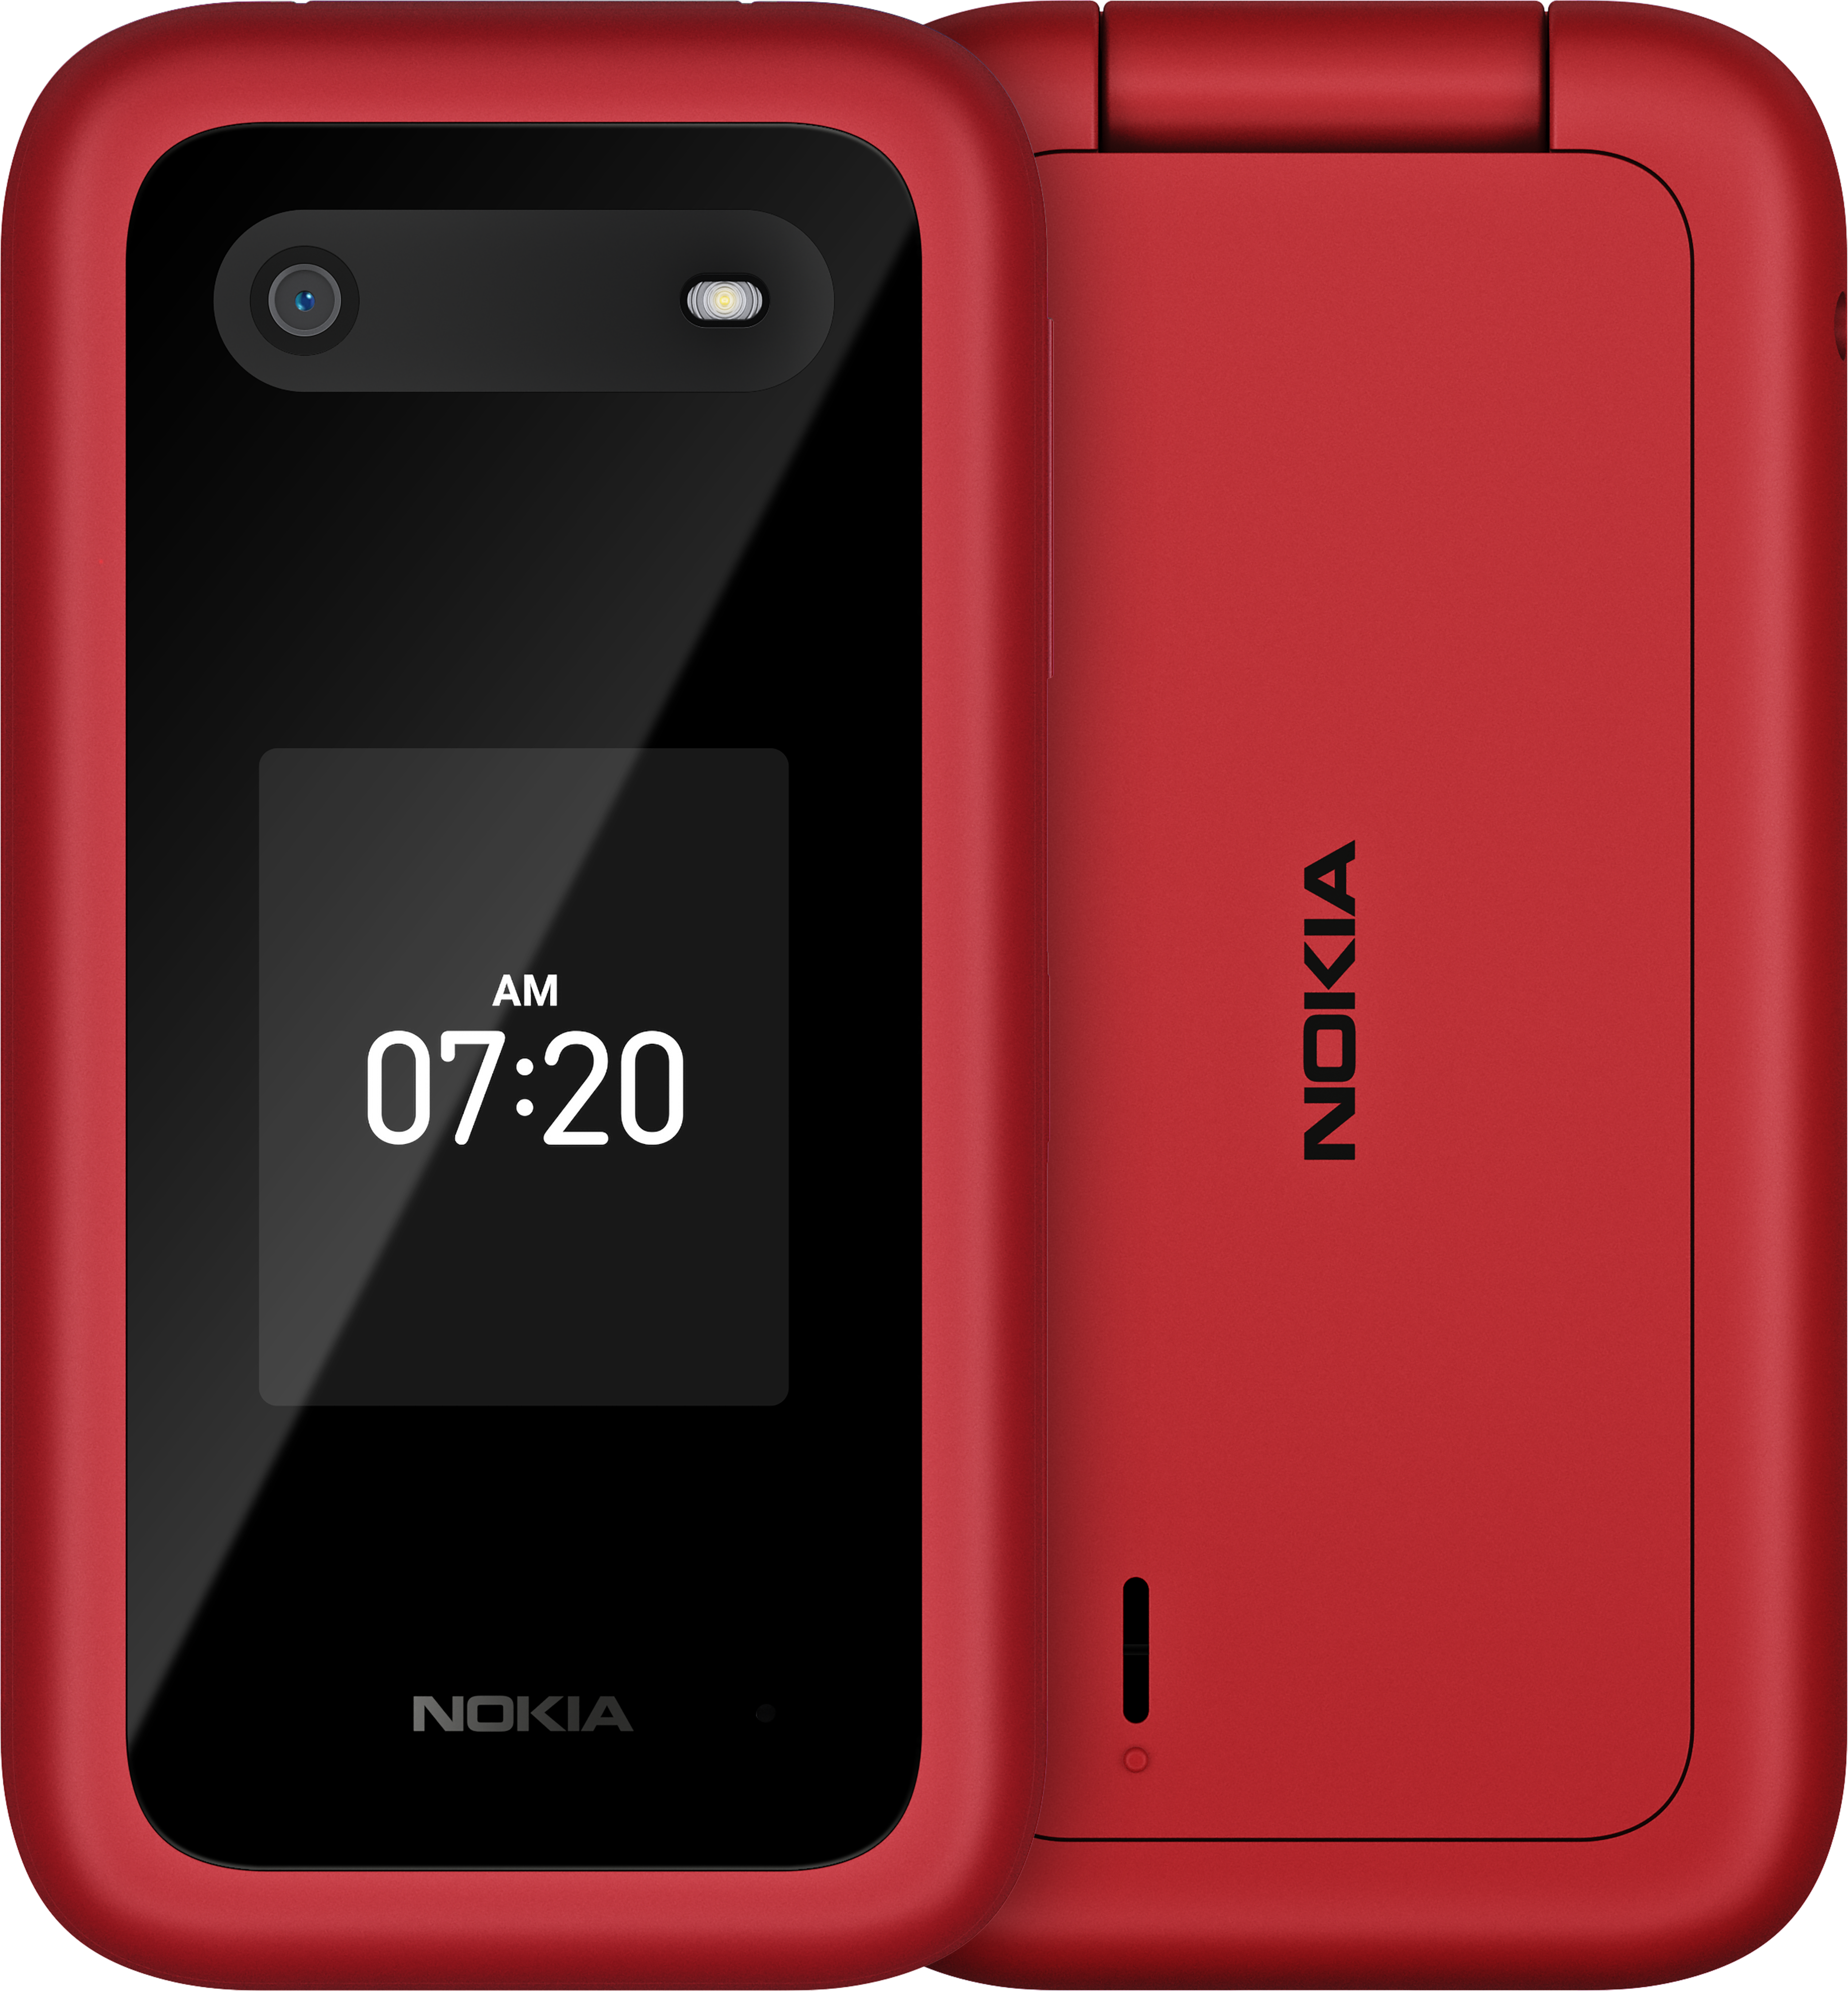 Nokia 2780 Flip feature mobile phone